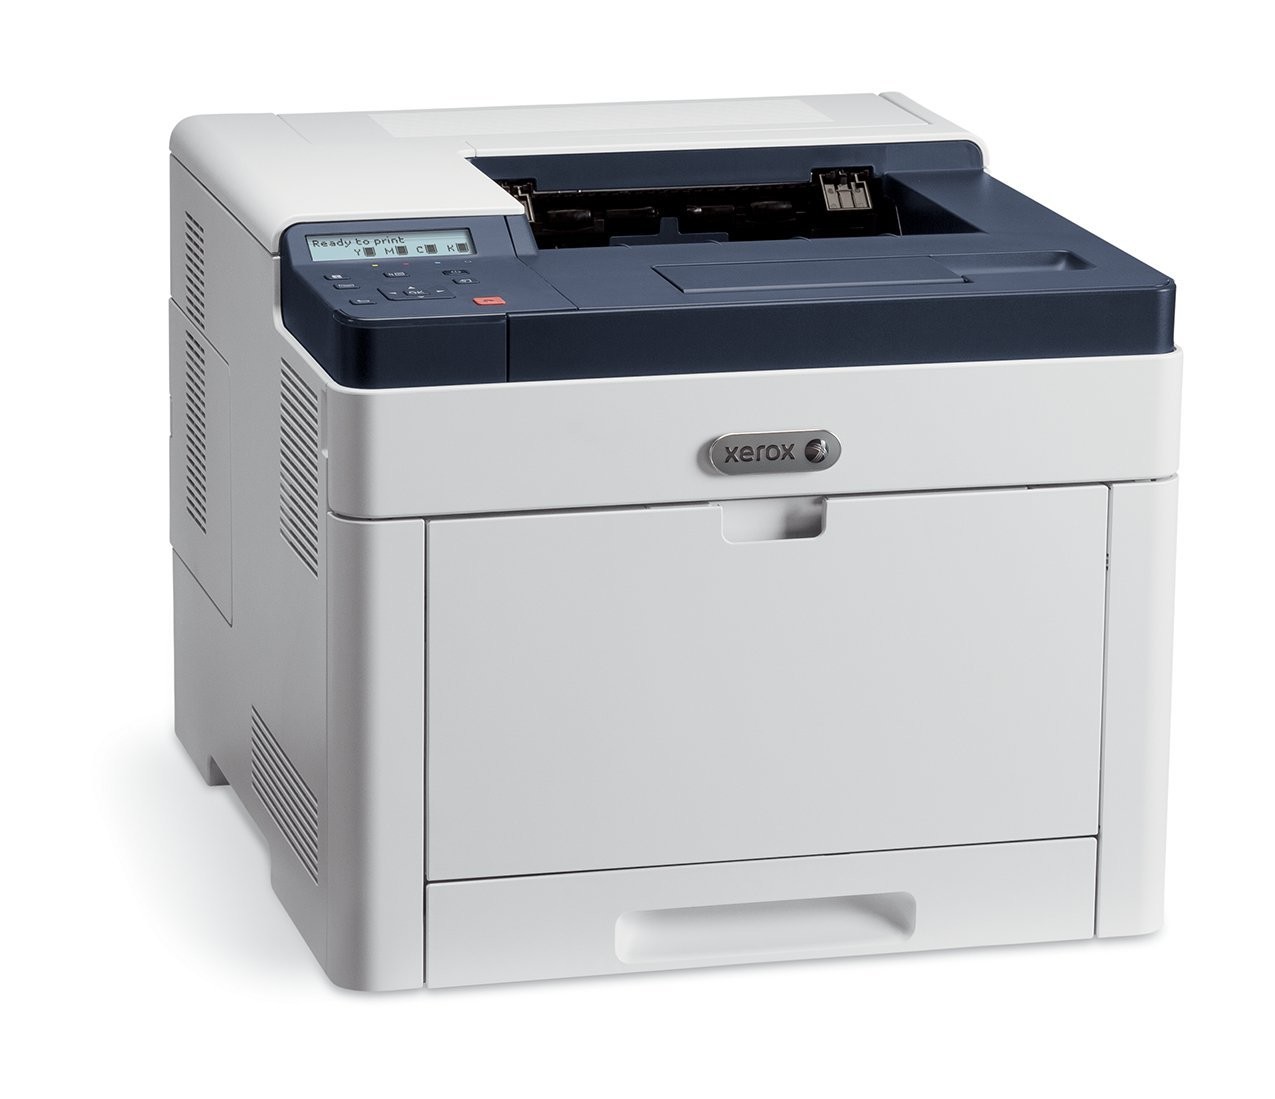 Best Home Printer Scanner 2018 For Mac